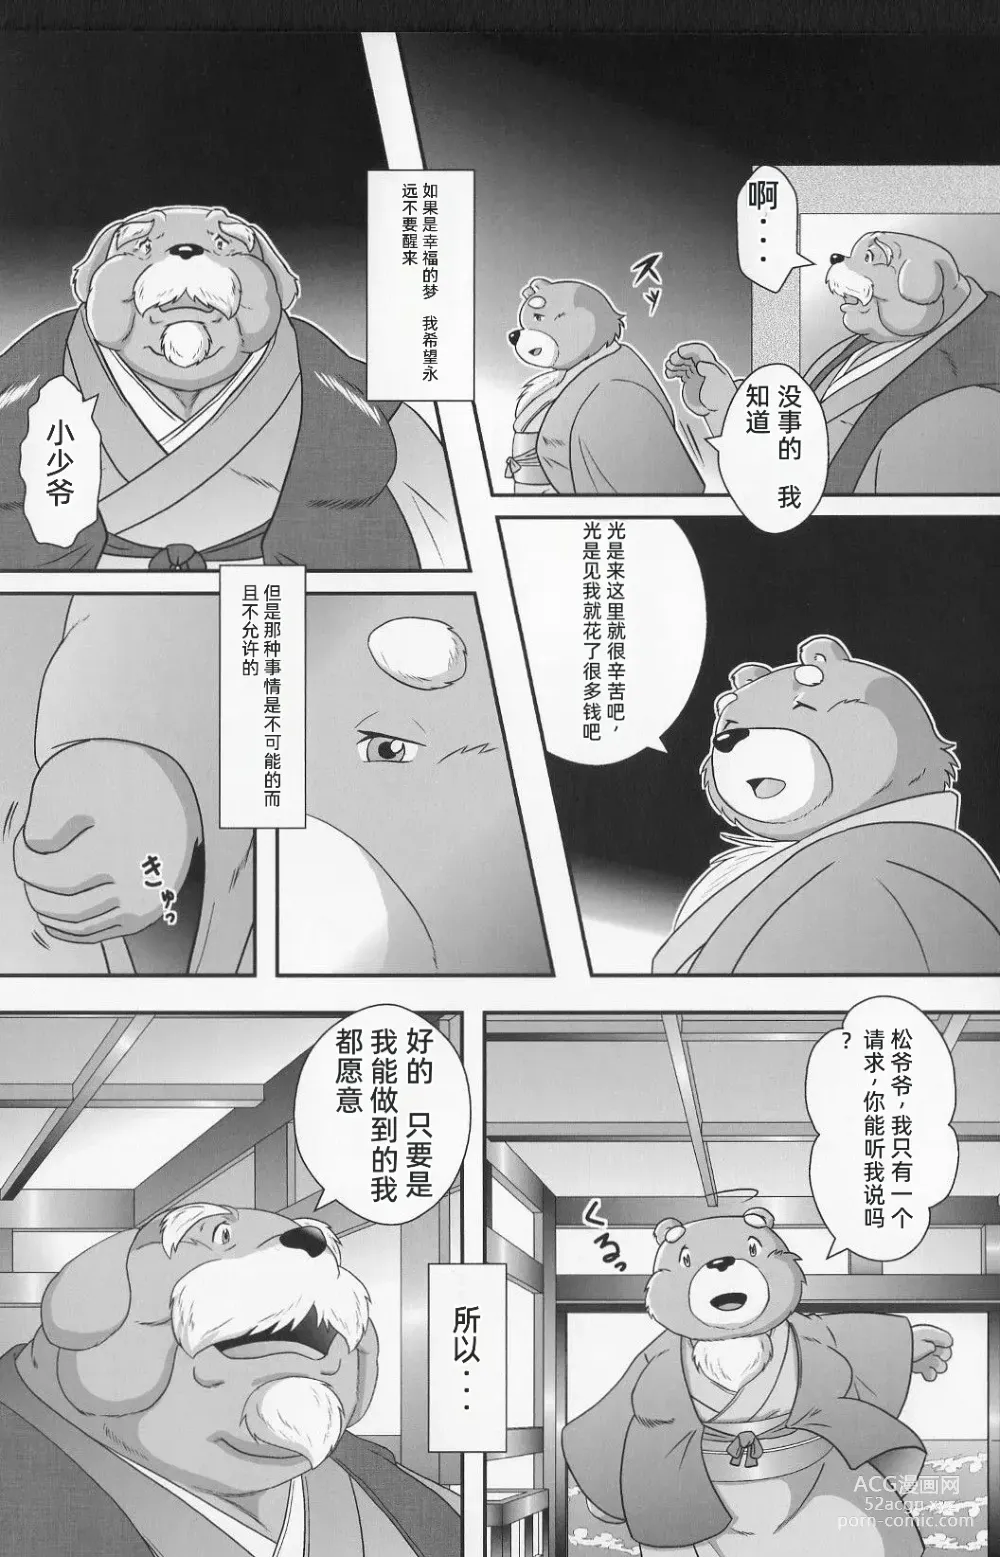 Page 59 of doujinshi 兽之楼郭 月华缭乱 月阴之章